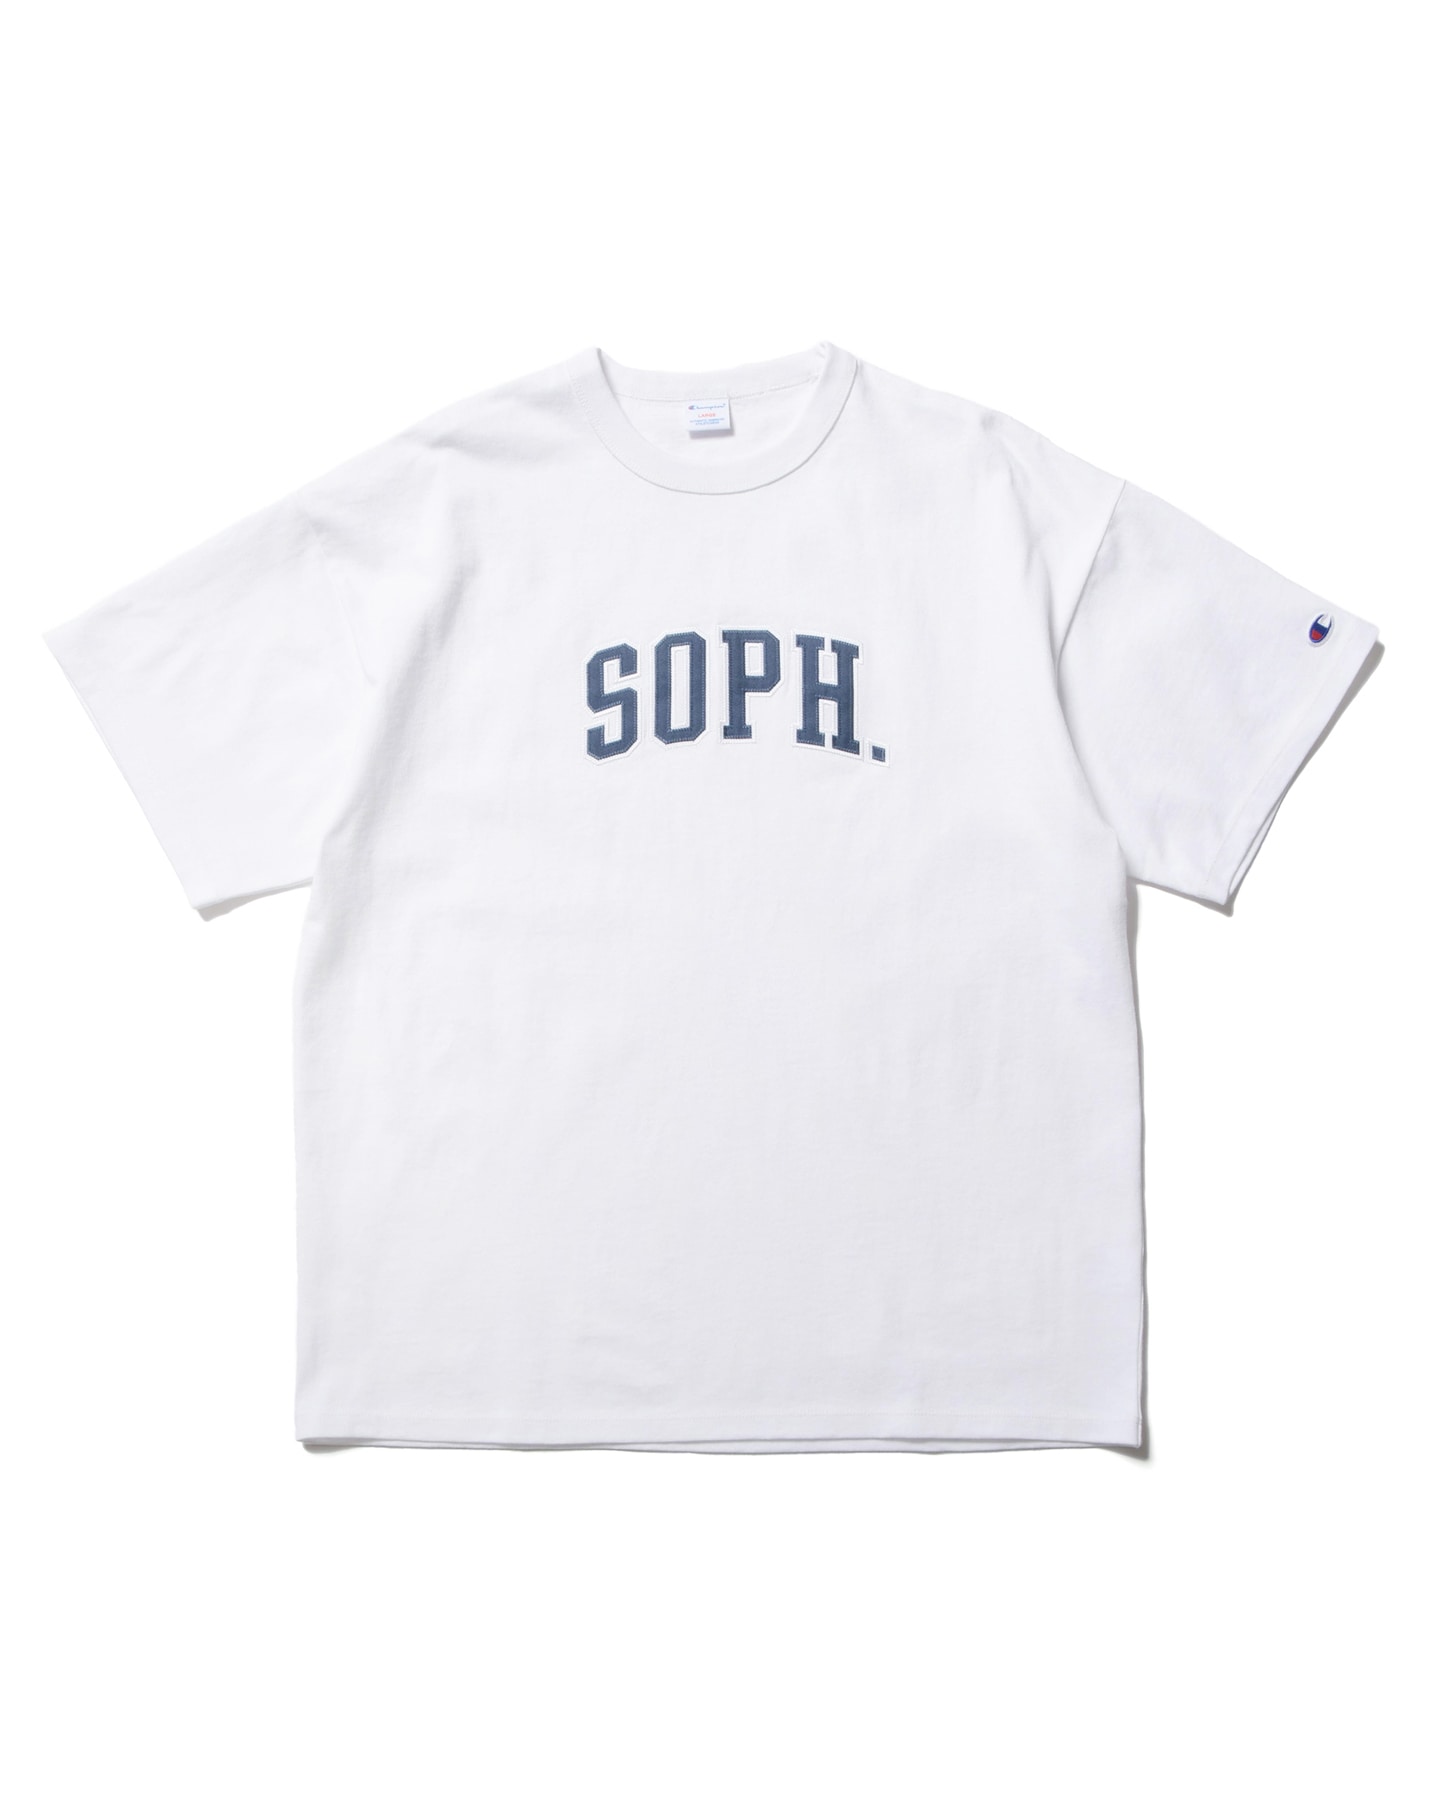 SOPH. | Champion CREWNECK TEE(XL WHITE):